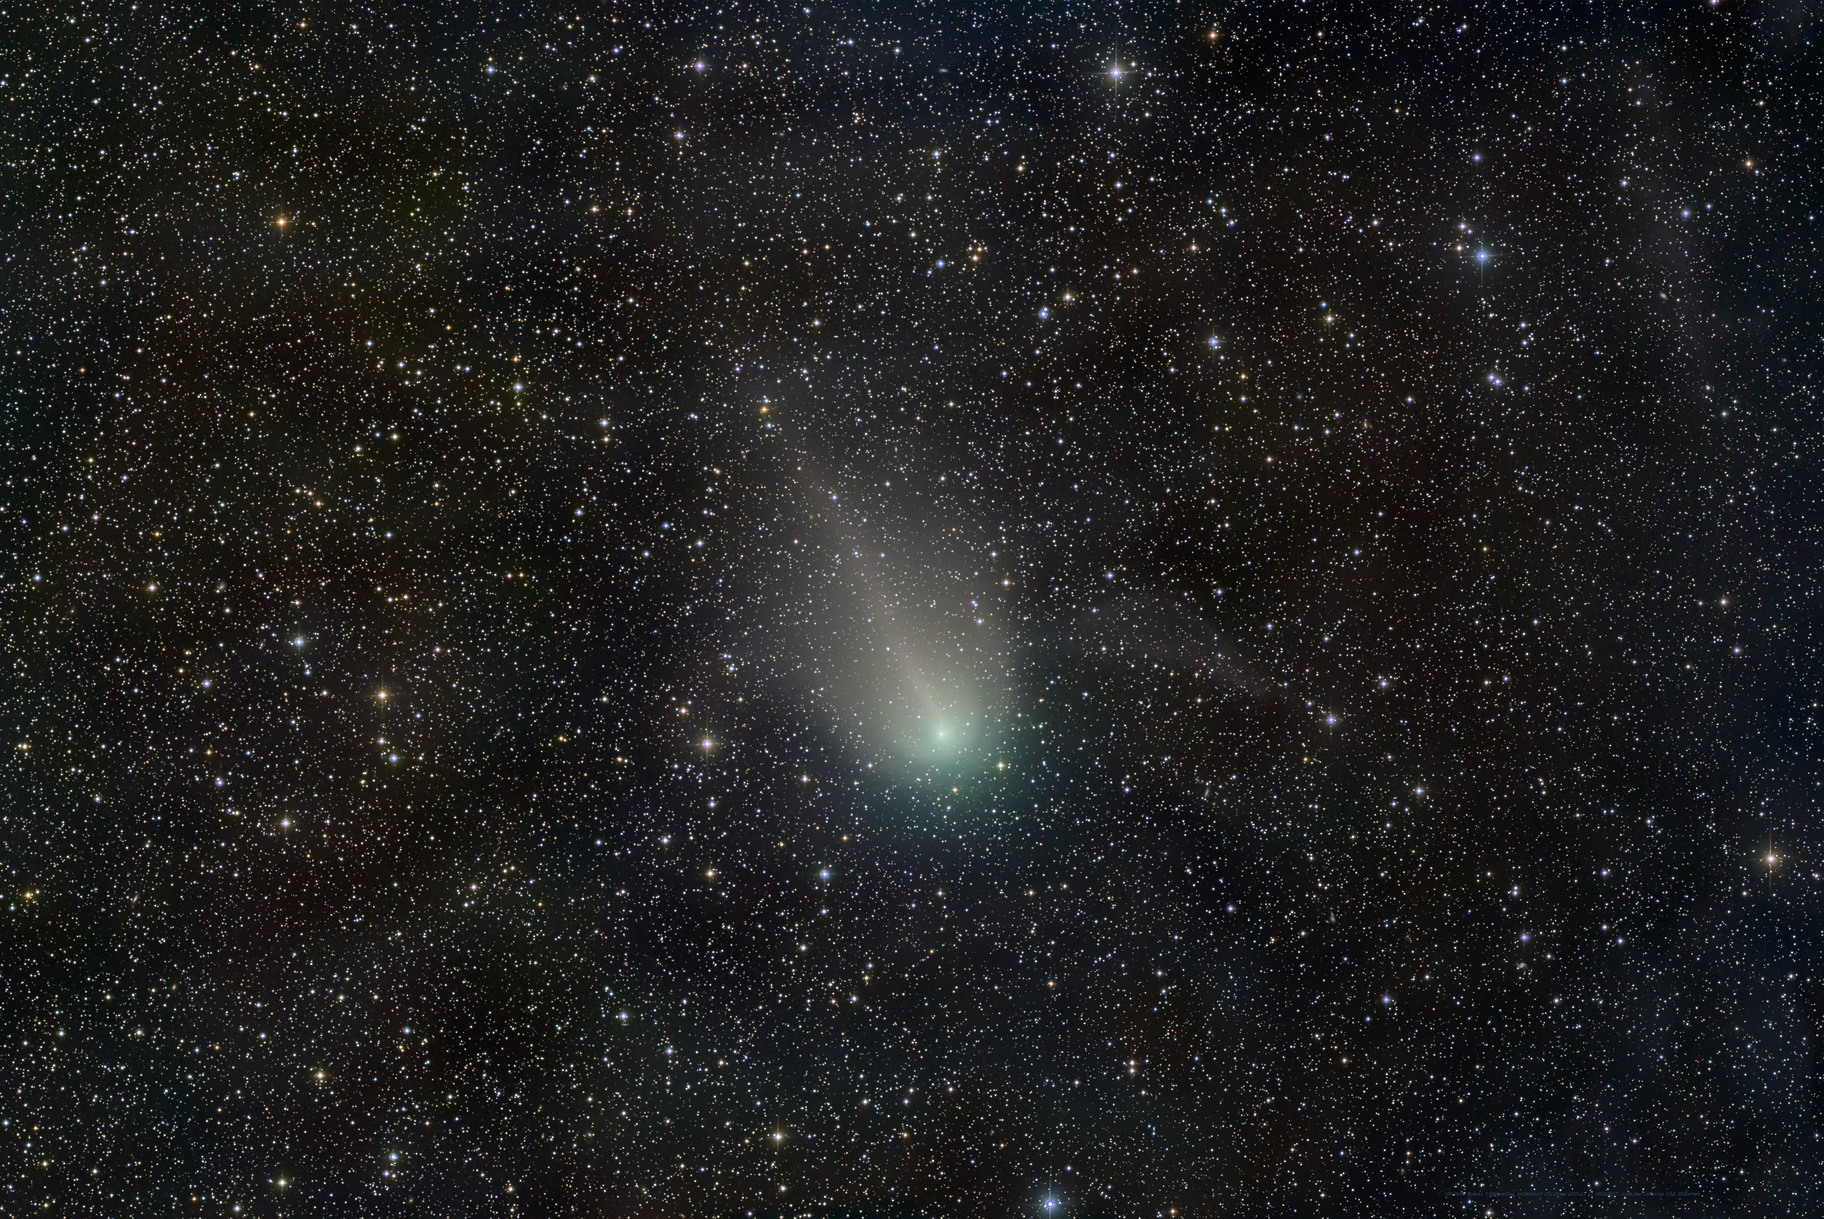 Comet Pons-Brooks zipping through constellation Lyra